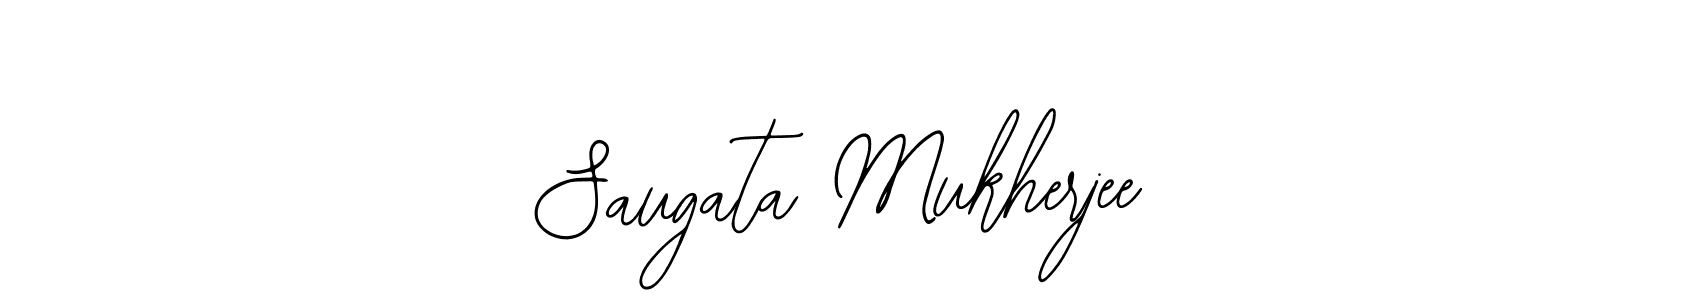 Make a beautiful signature design for name Saugata Mukherjee. Use this online signature maker to create a handwritten signature for free. Saugata Mukherjee signature style 12 images and pictures png